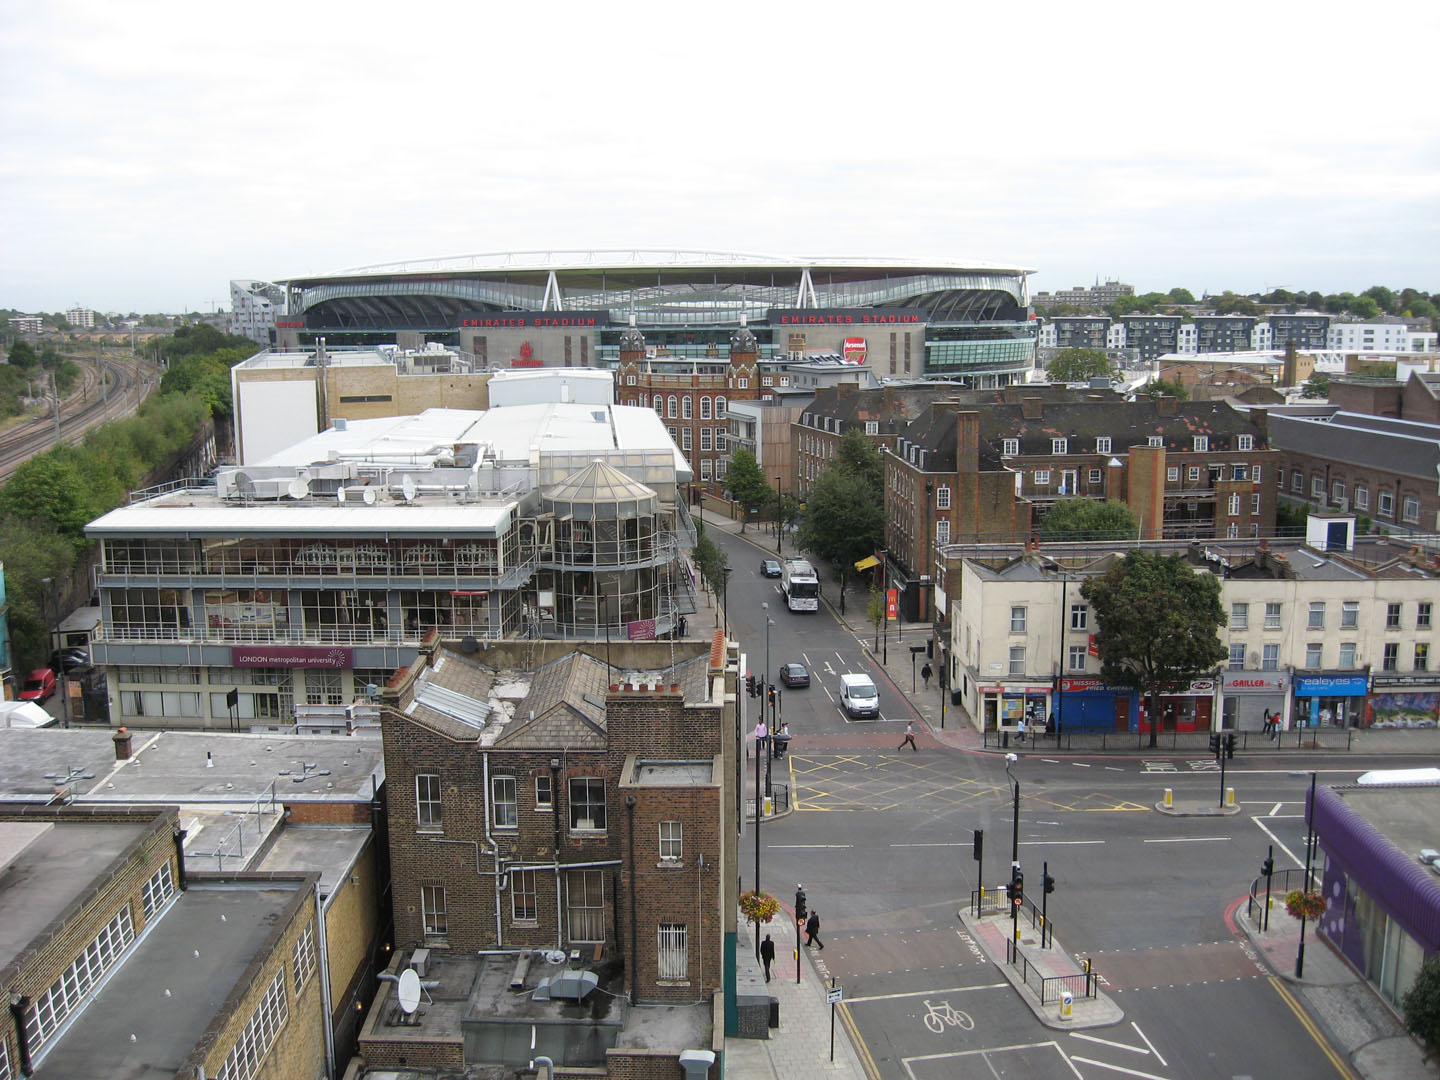 Emirates Stadium, home for Arsenal